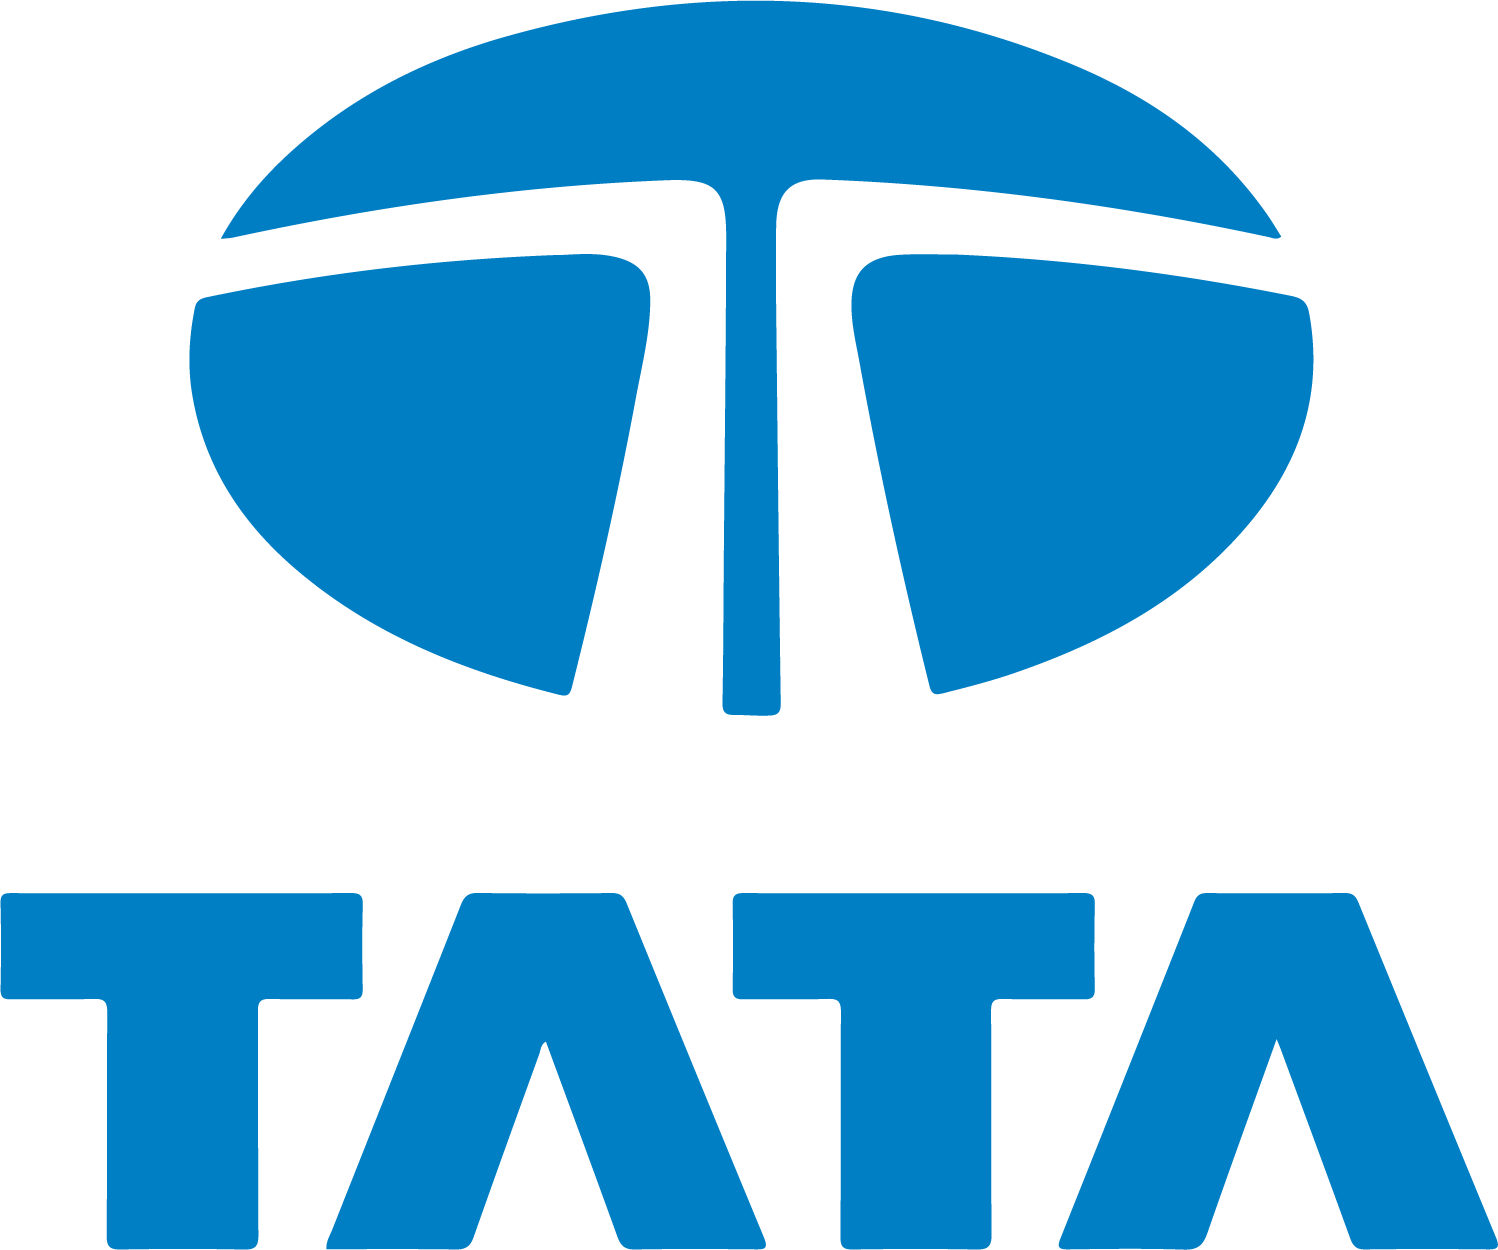 Tata Power | MIT Energy Initiative